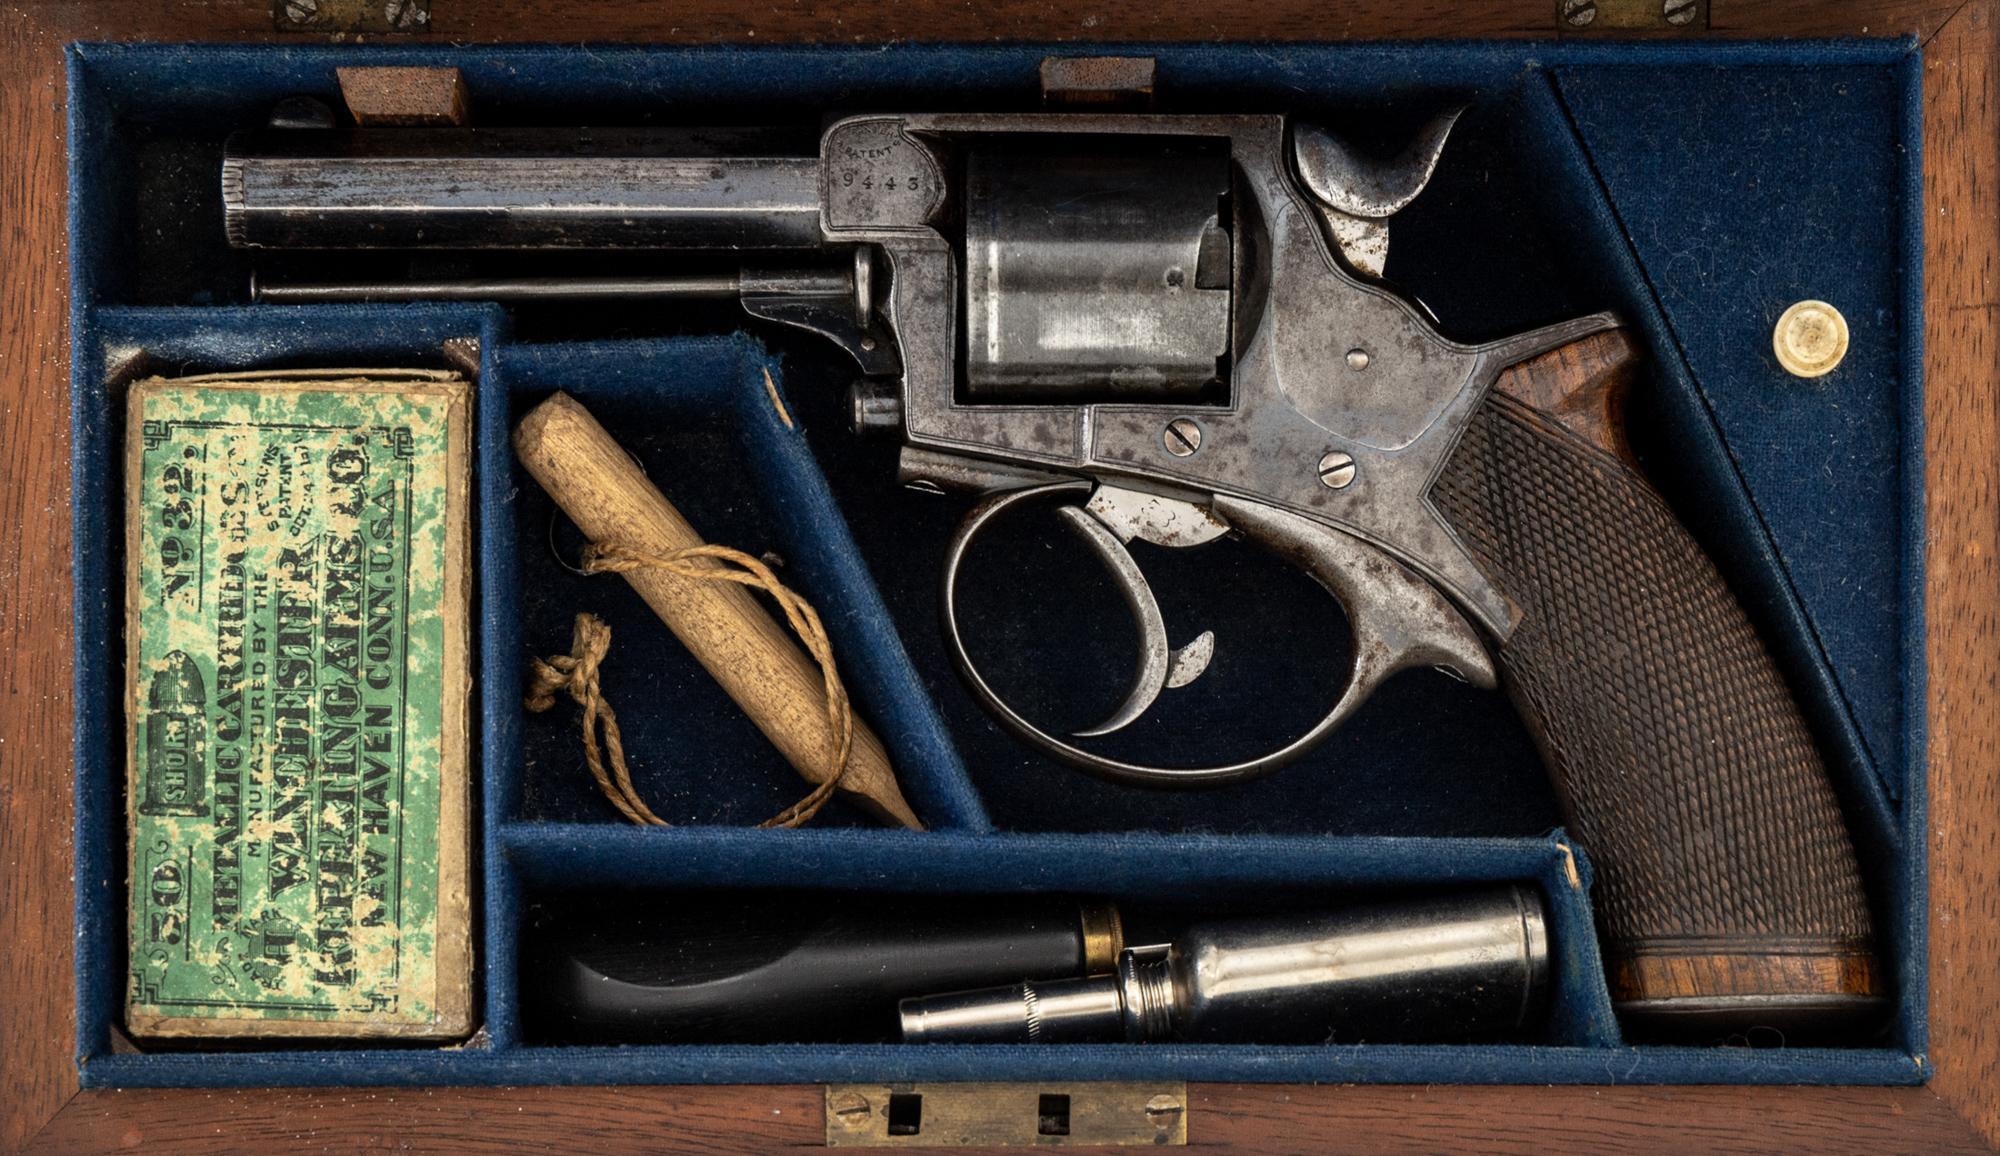 Antique Cased English Tranter Revolver